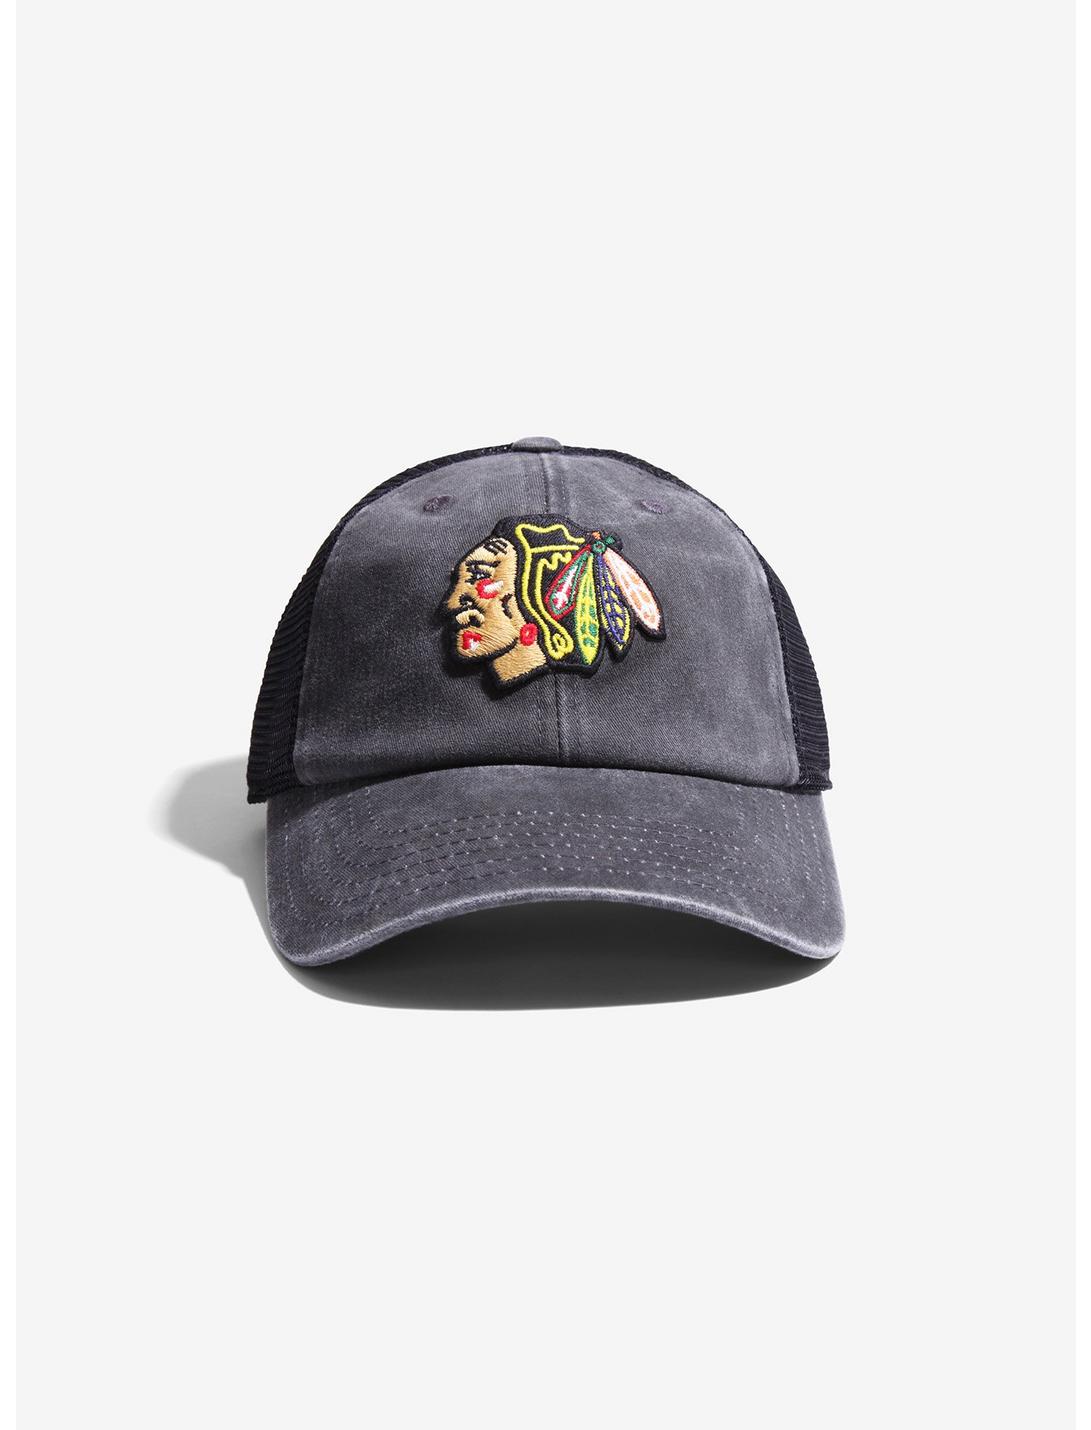 Chicago Blackhawks Mesh Raglan Hat, , hi-res